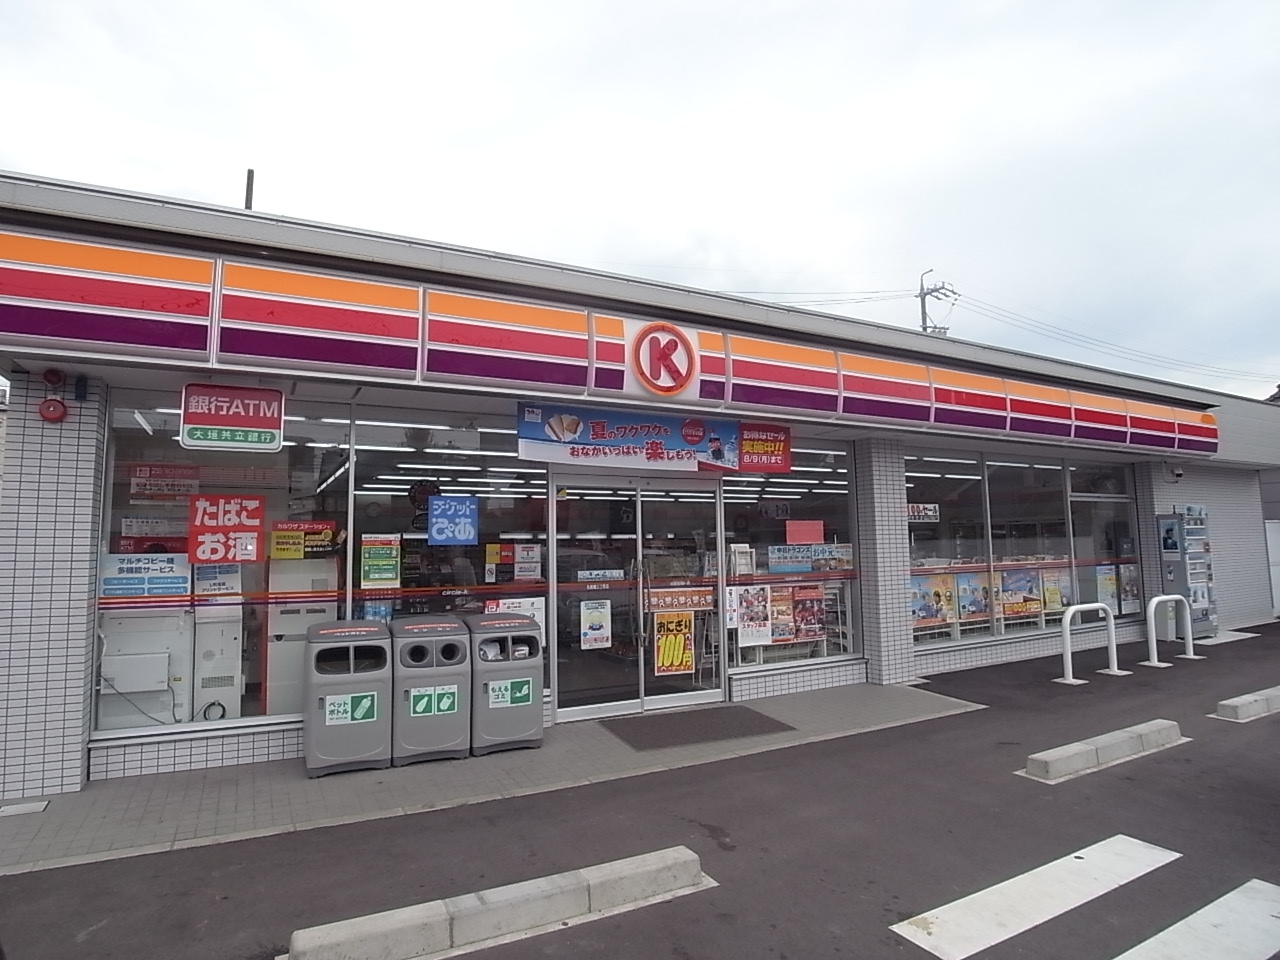 Convenience store. Circle K Meiminami Toyozo chome up (convenience store) 242m